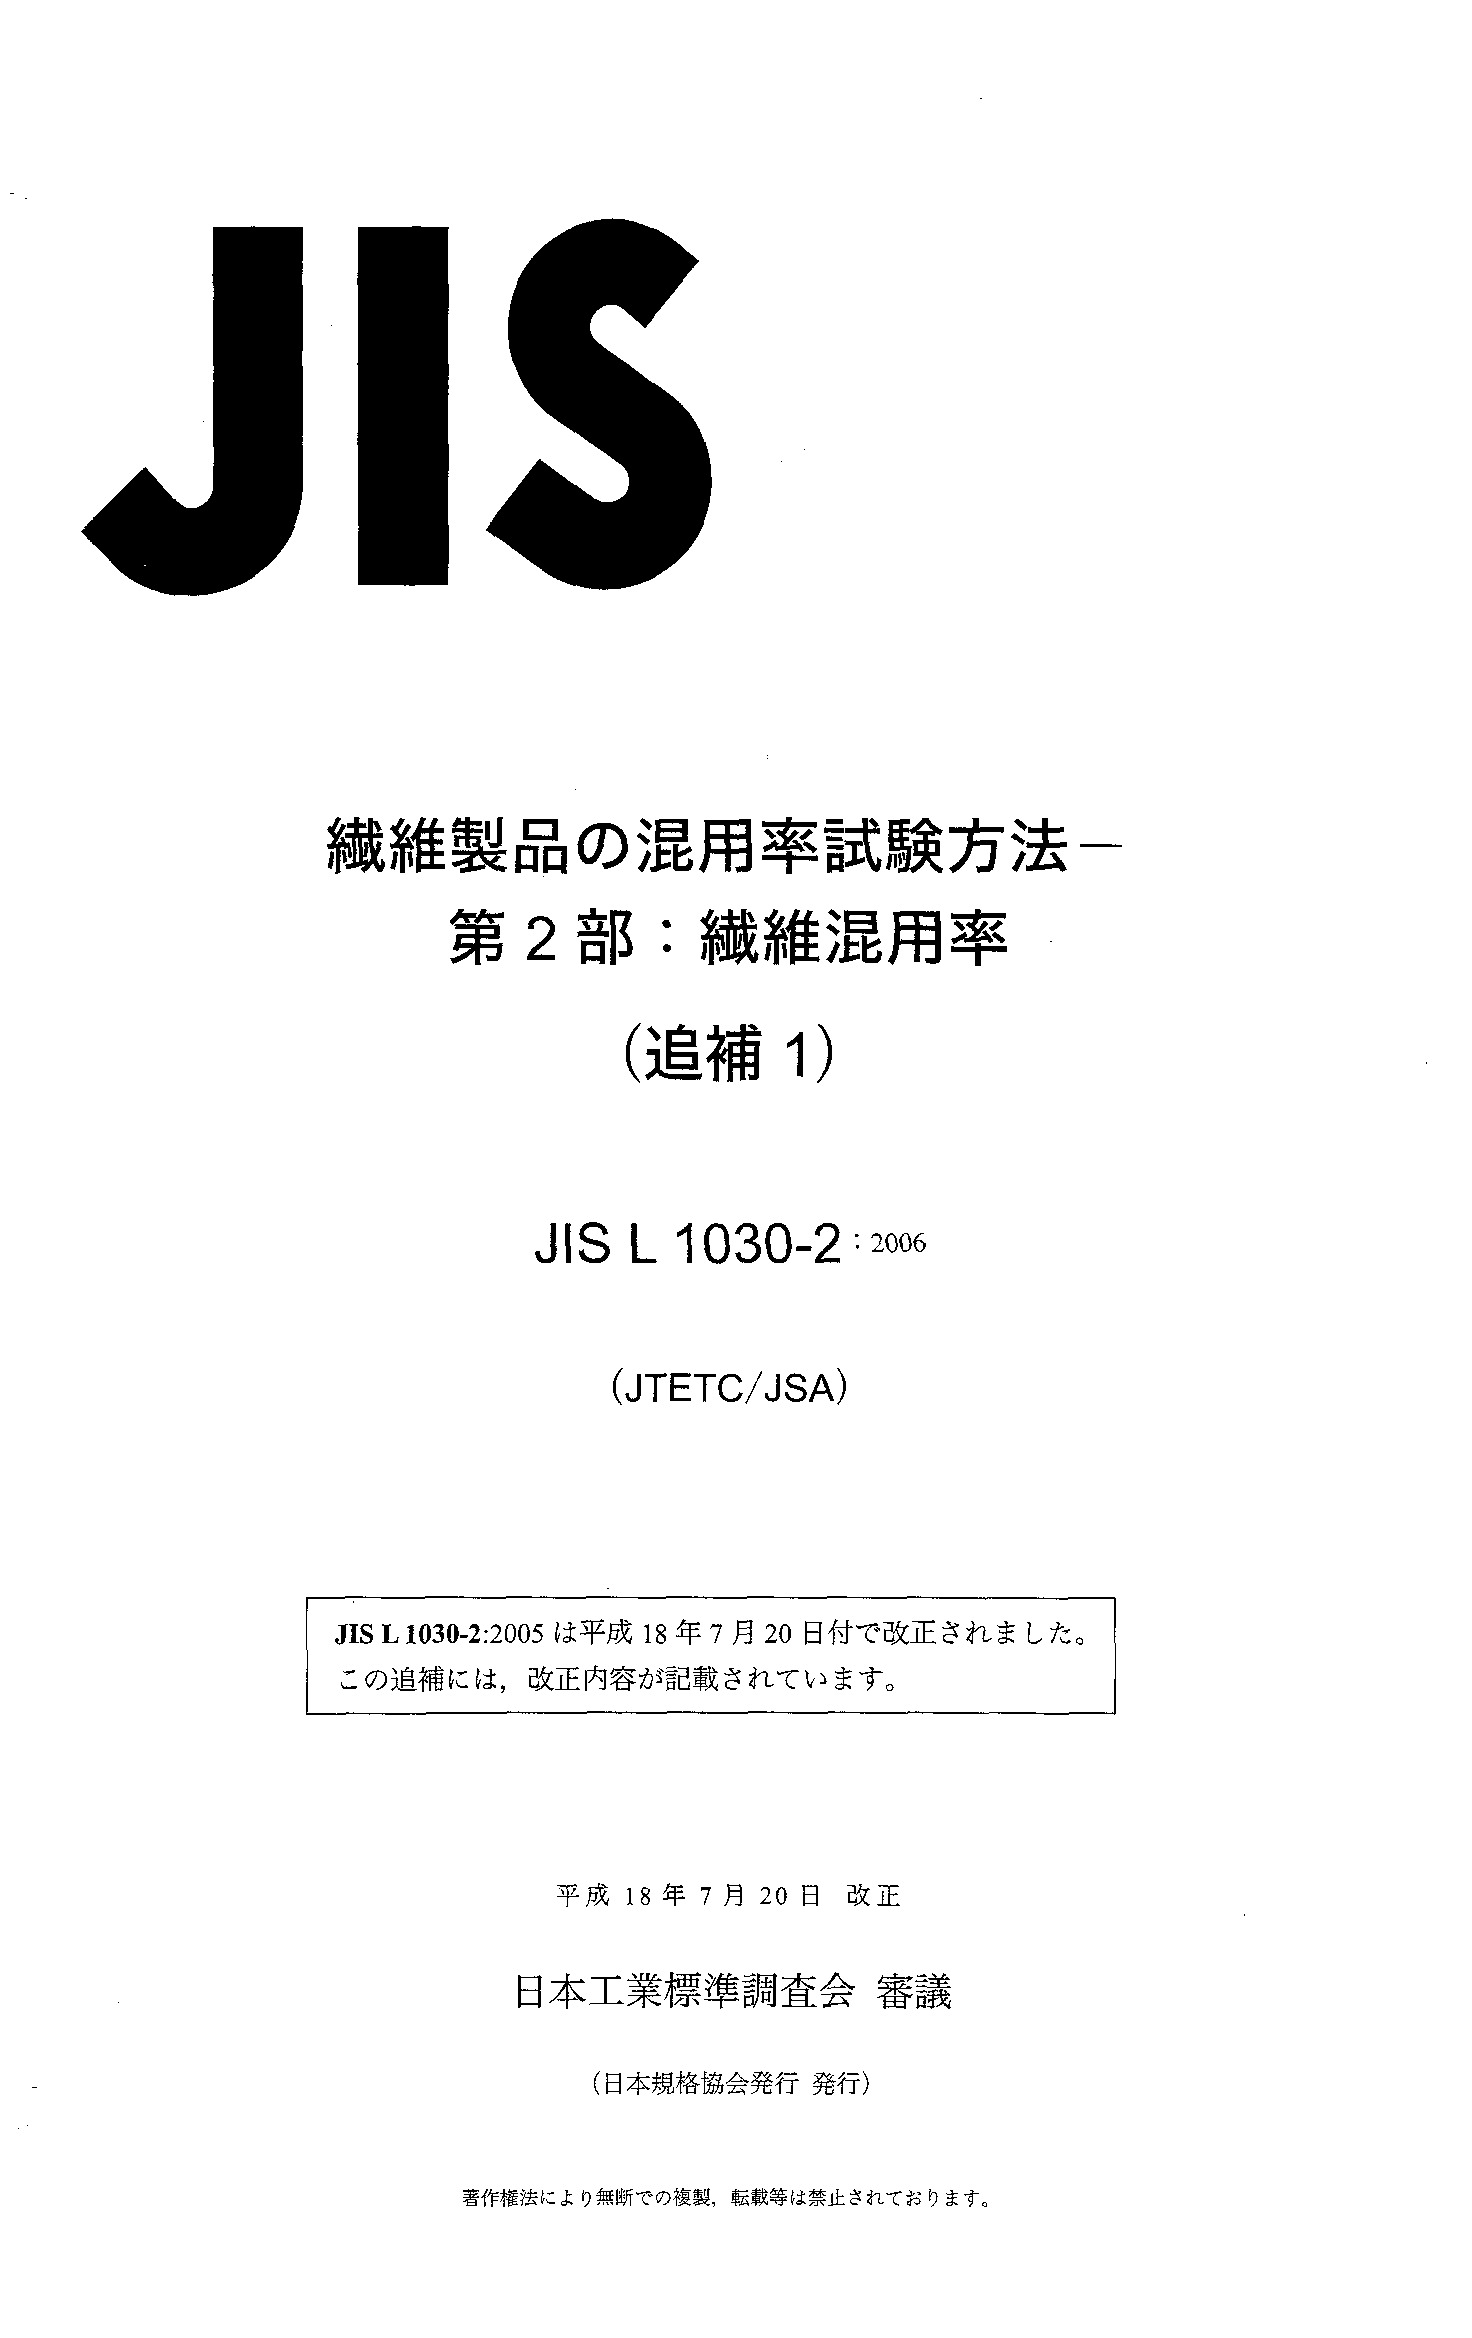 JIS L1030-2 AMD 1-2006